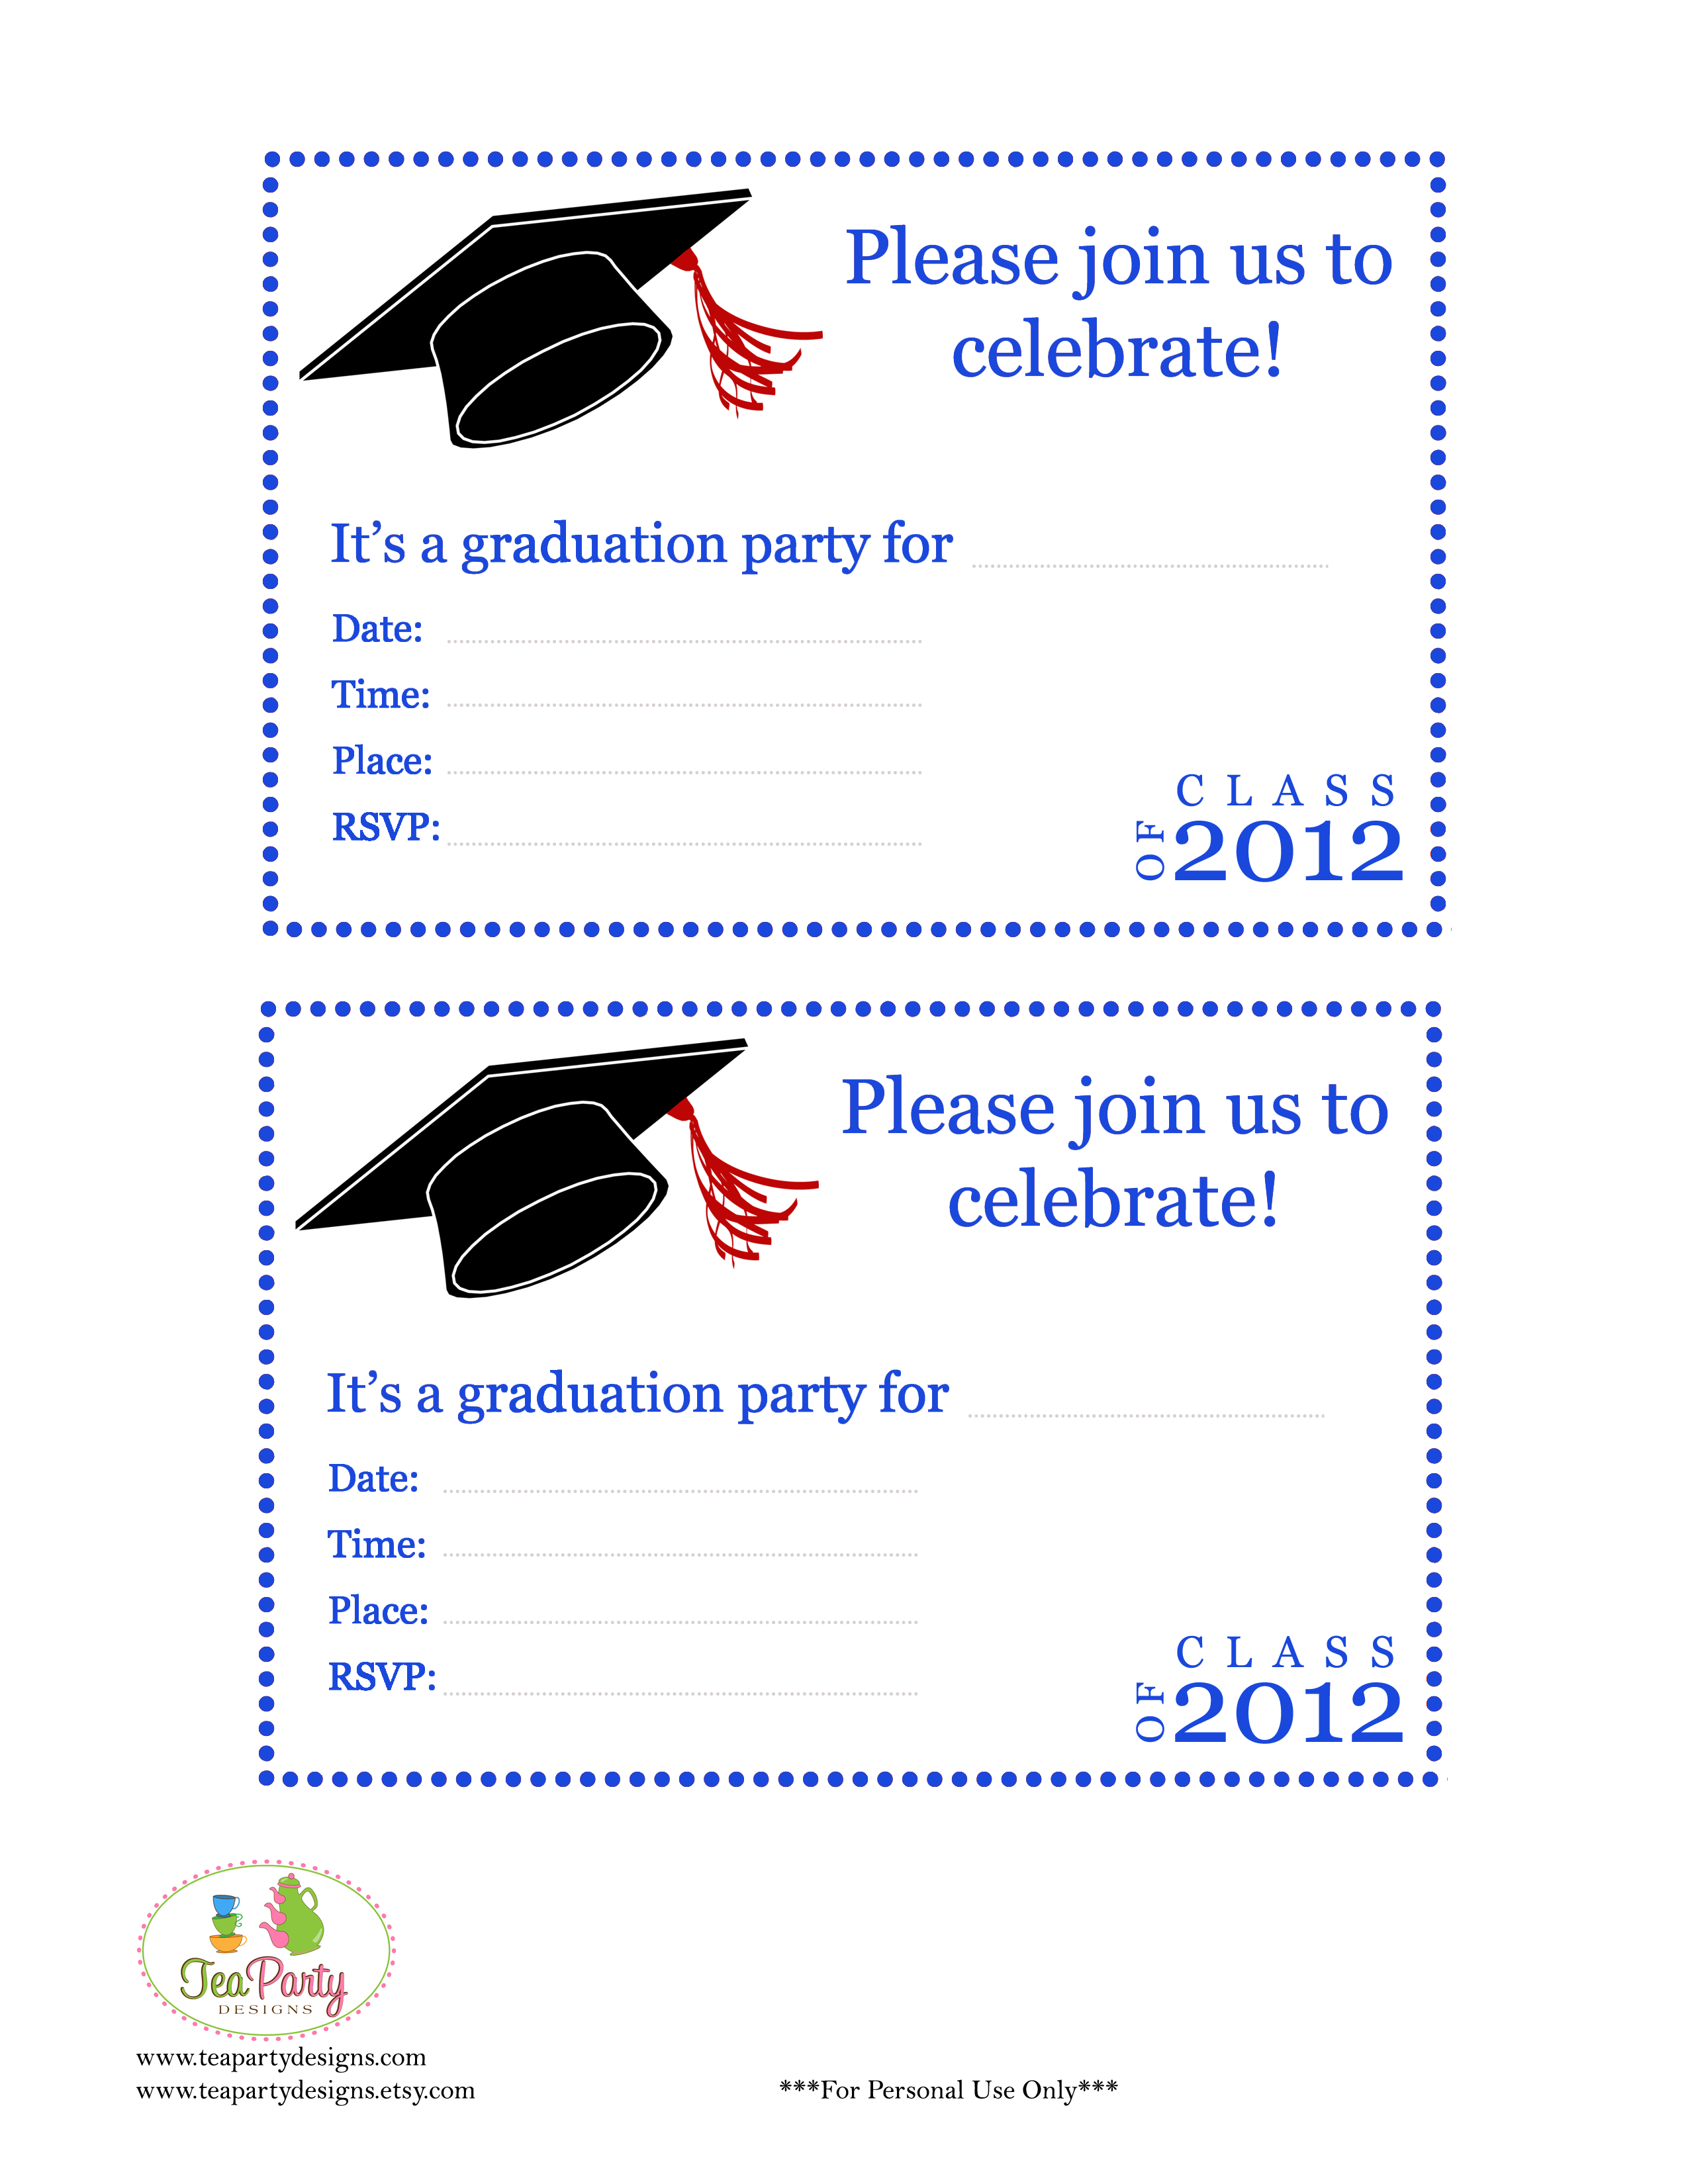 graduation-party-invitation-templates-free-word